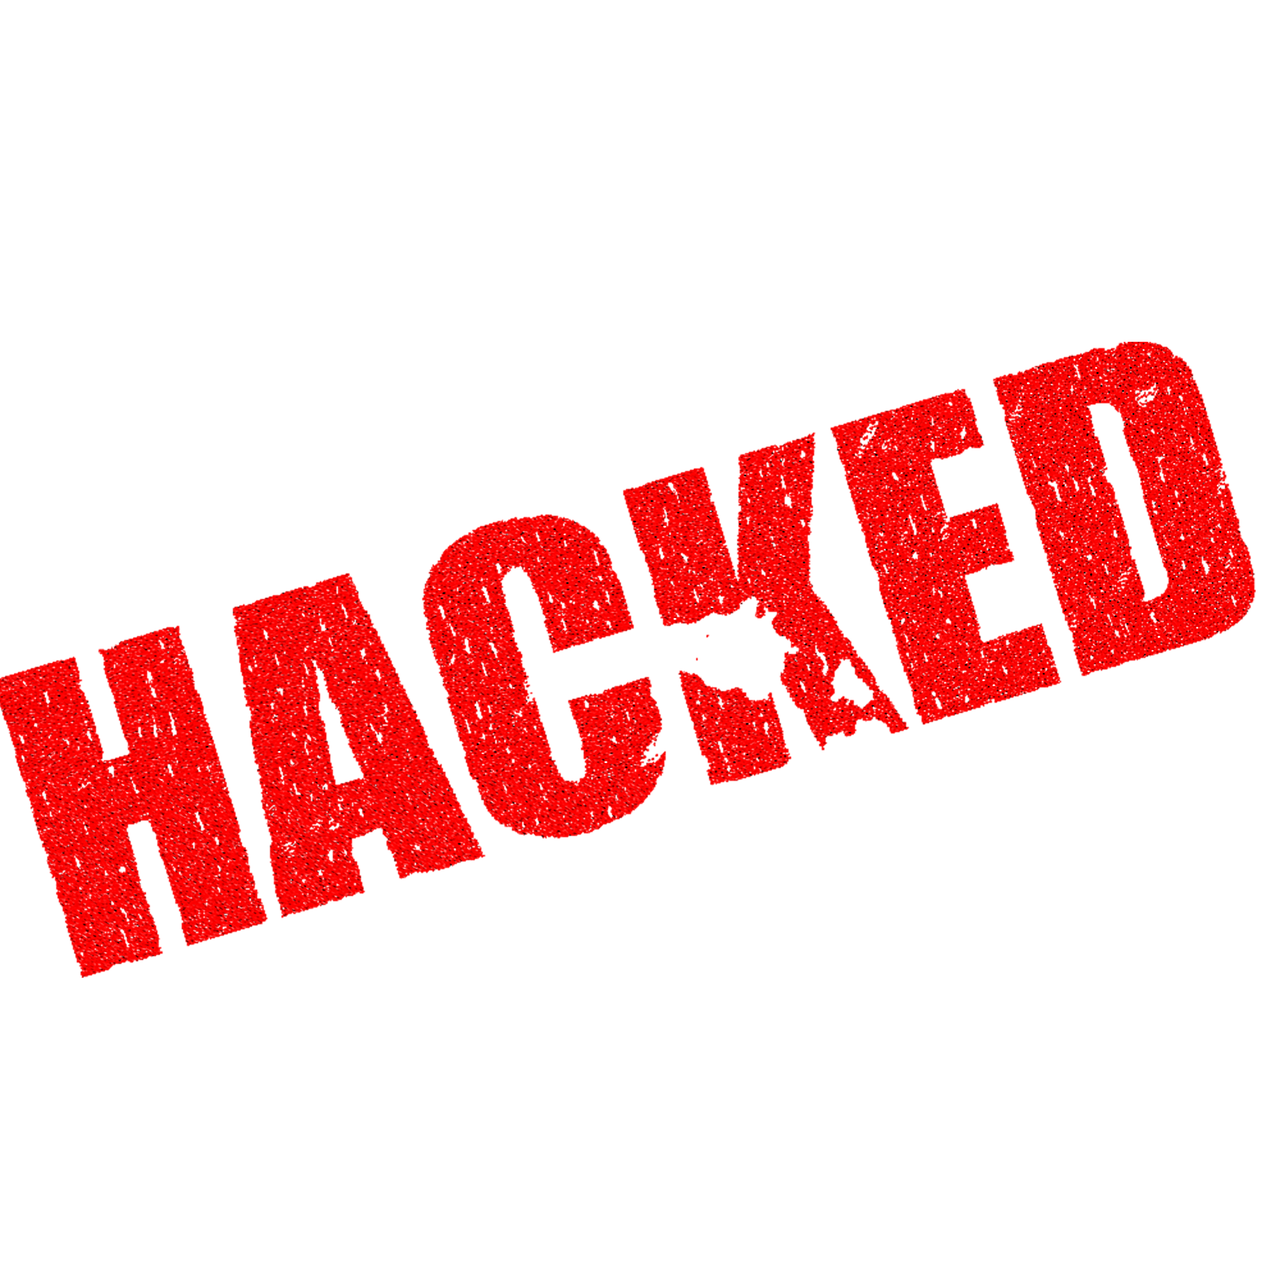 hacked, cyber crime, computer-2127635.jpg